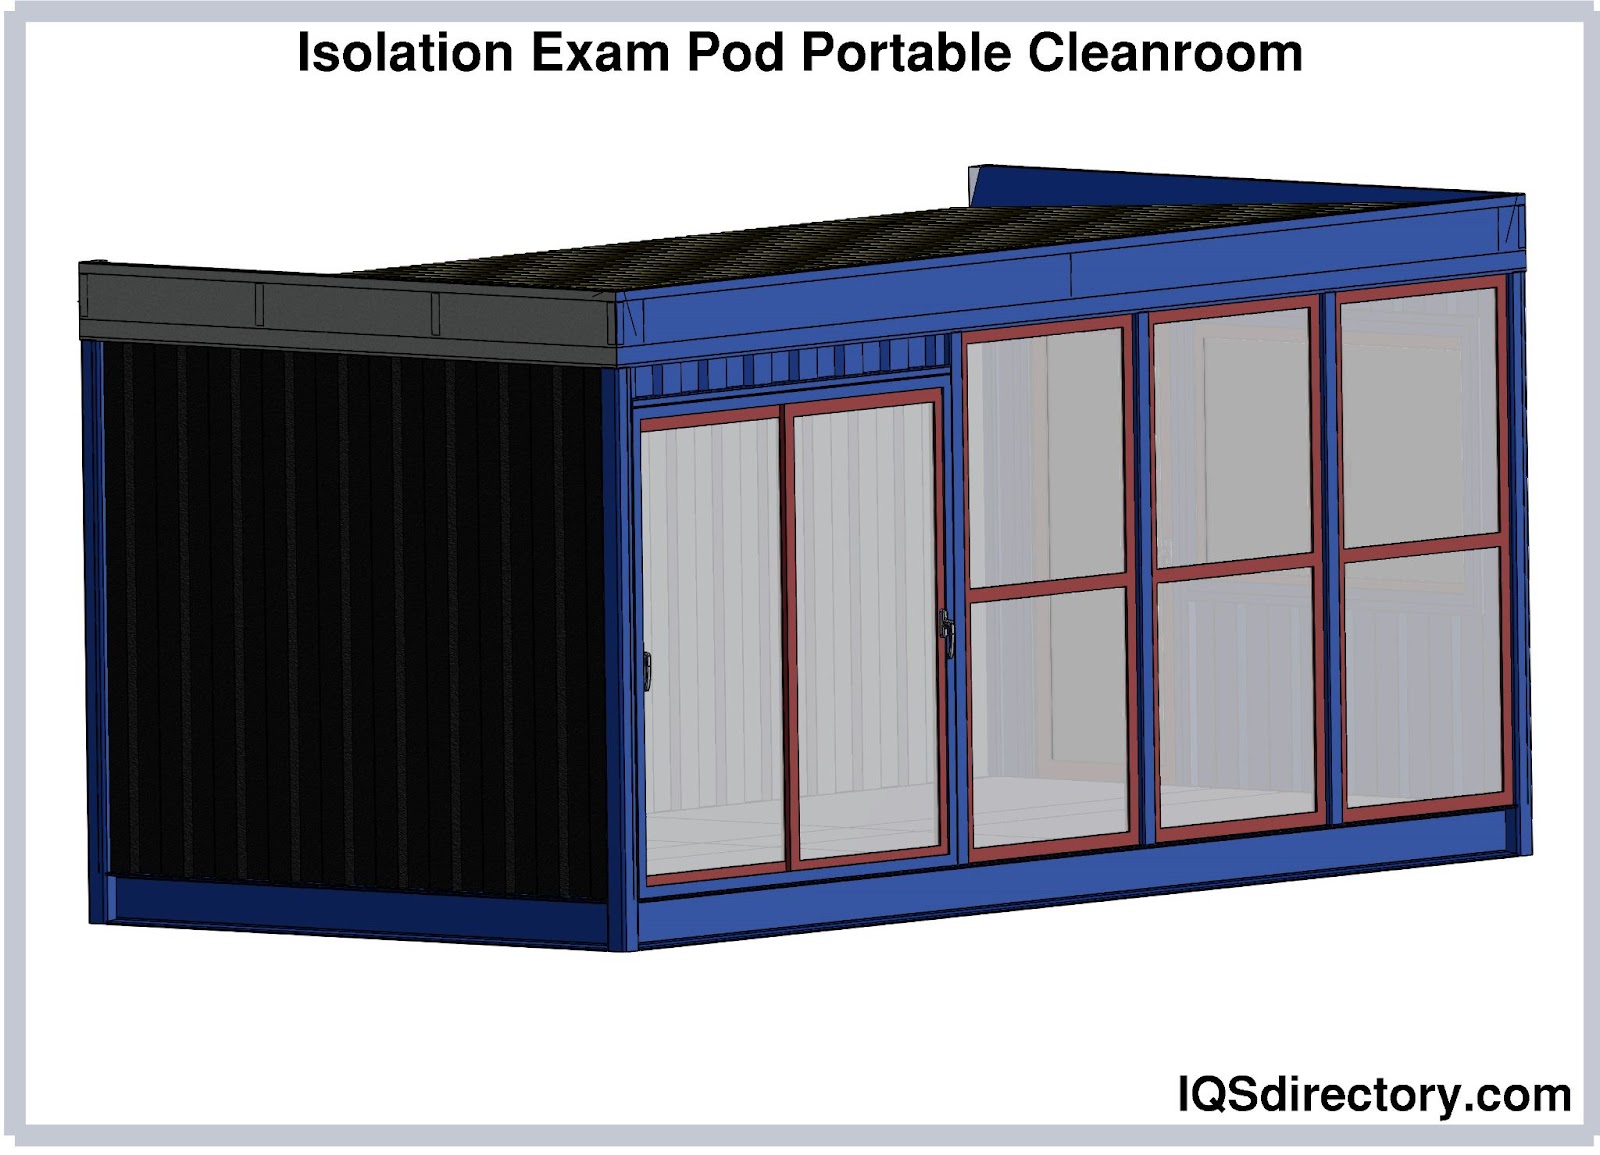 Isolation Exam Pod Portable Cleanroom